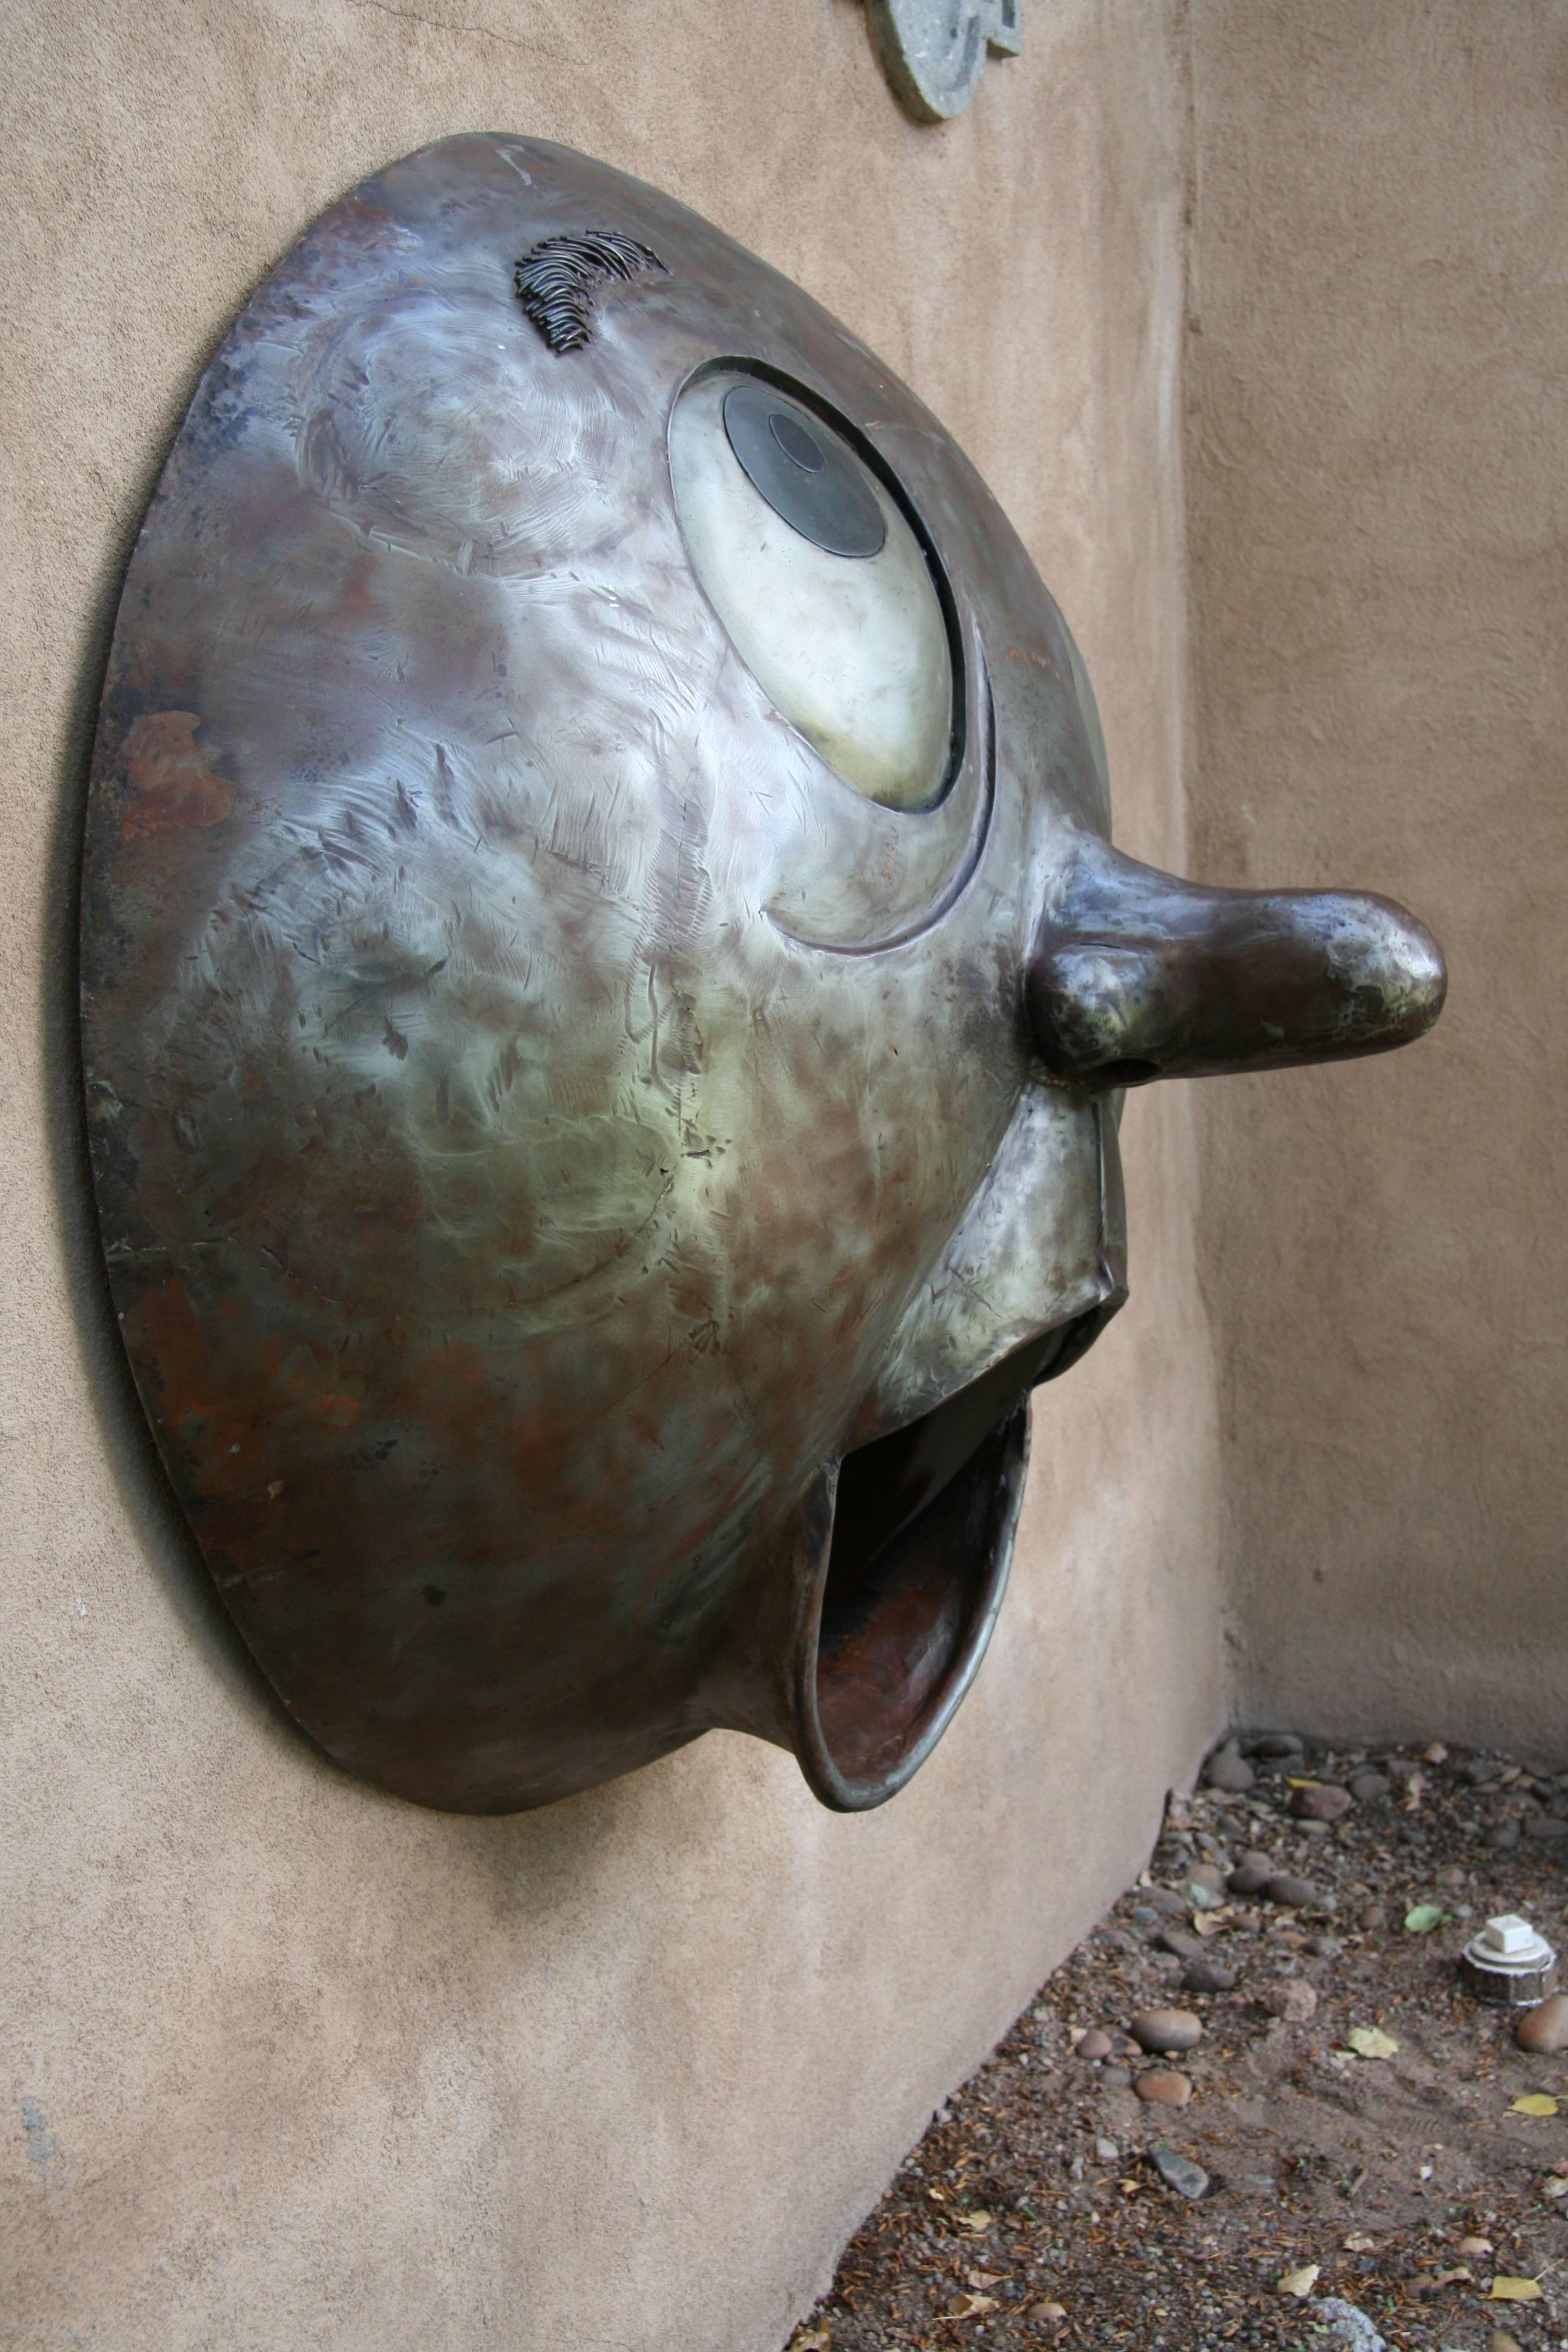 Yelp, Rodger Jacobsen, steel, large wall sculpture, big eyes, humorous, big eyes

wall mounted steel sculpture